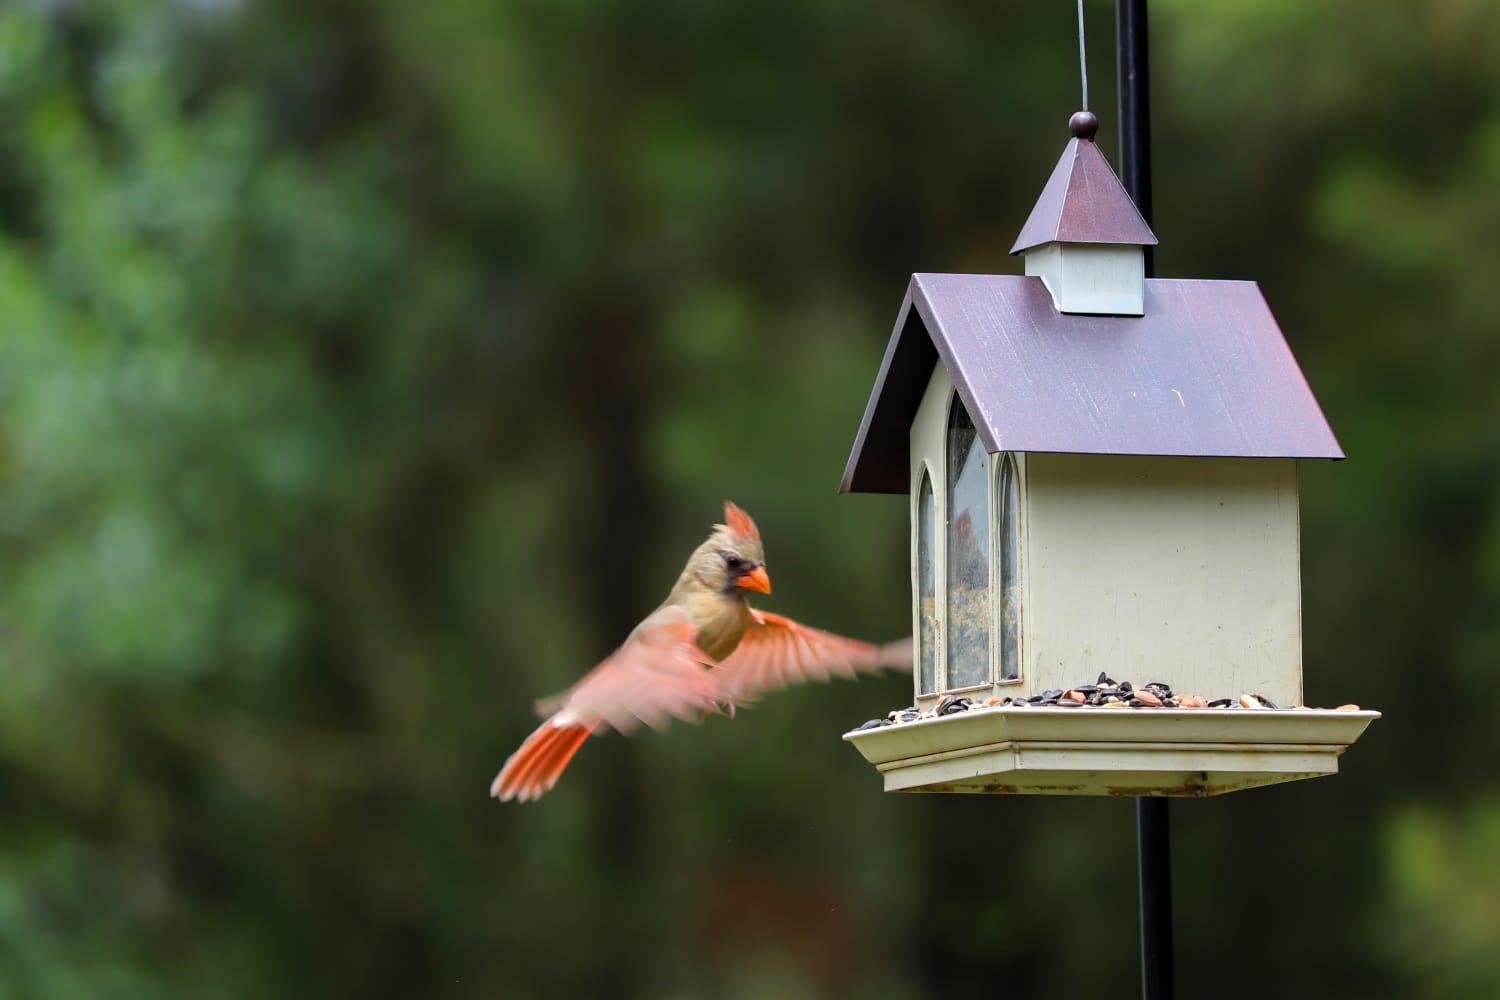 Take Beautiful Close-Up Nature Photos With This Smart Bird Feeder